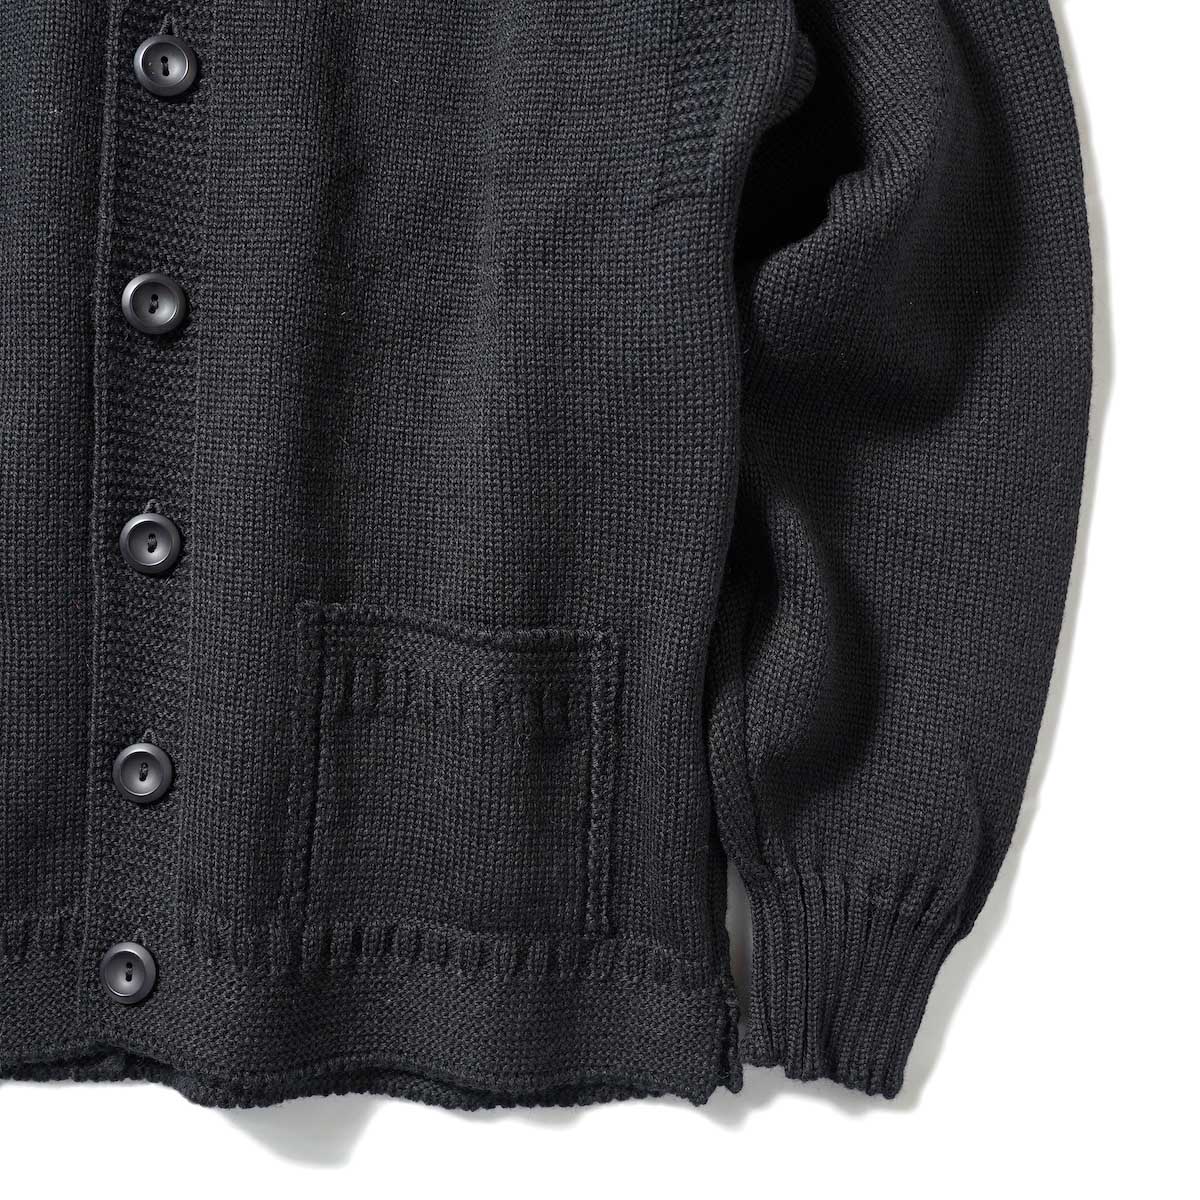 Guernsey Woollens / Bouet (Black)袖、裾